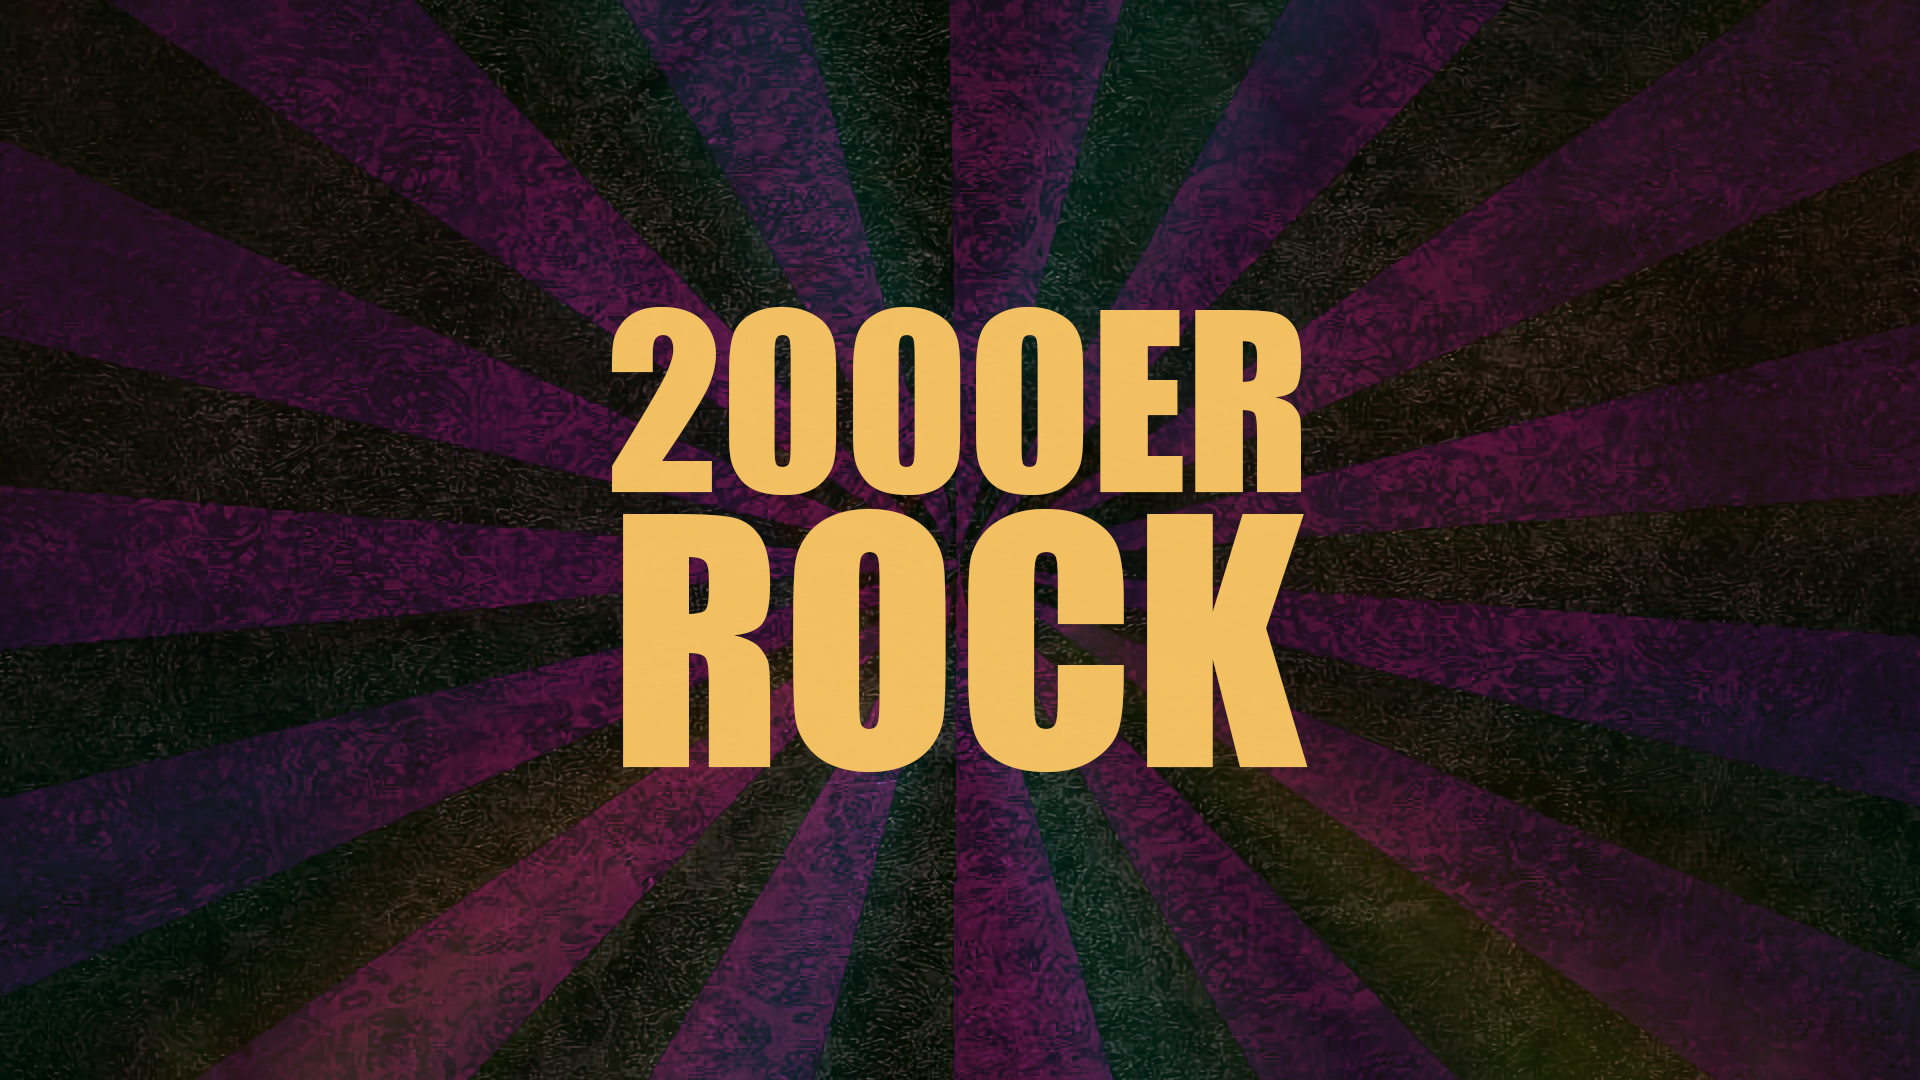 2000er rock neu fb